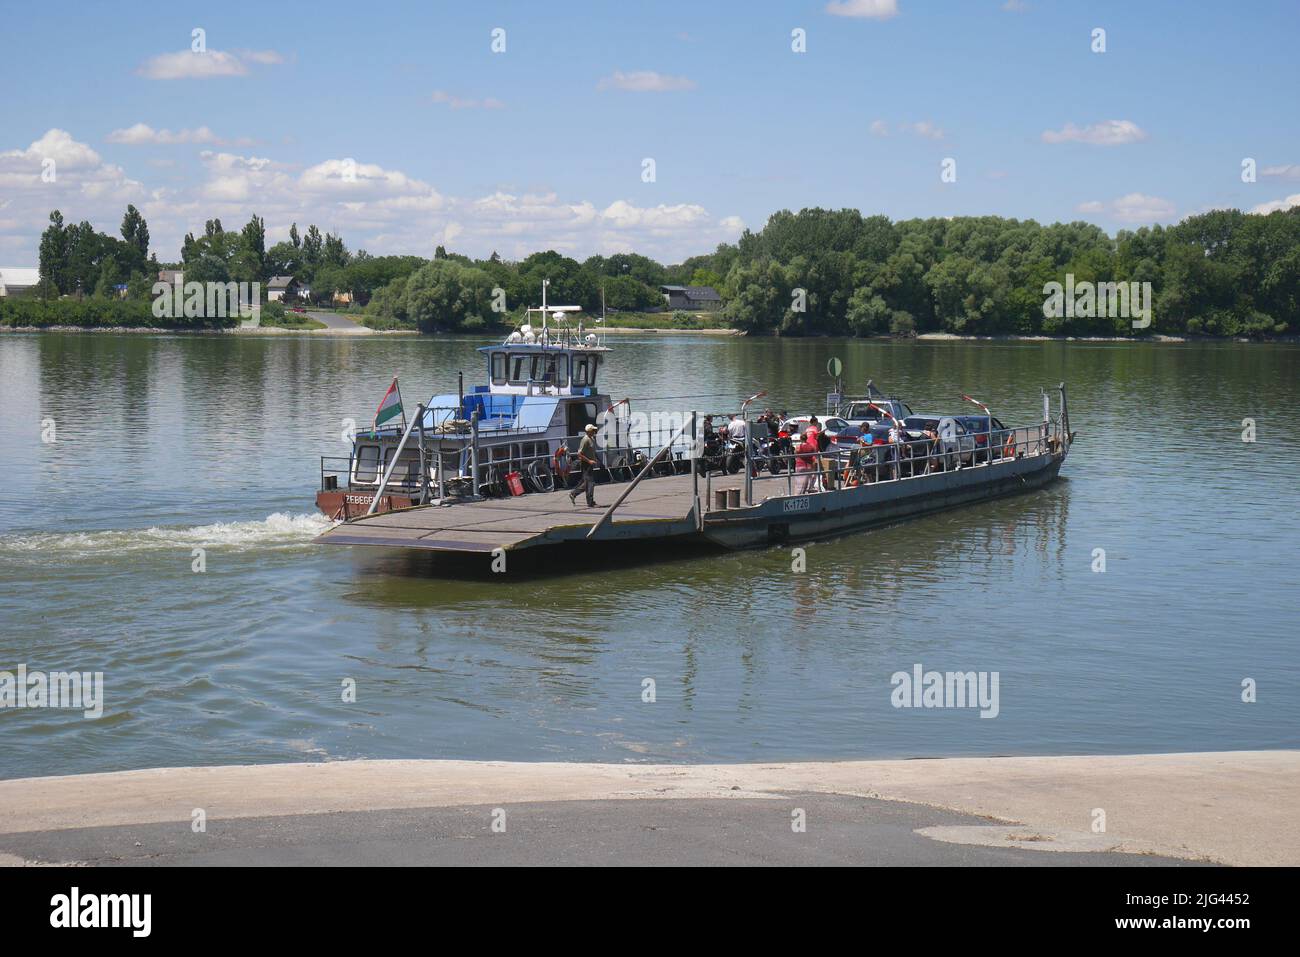 The Lorev to Adony ferry across the River Danube, Lorev, Csepel Island, Hungary Stock Photo